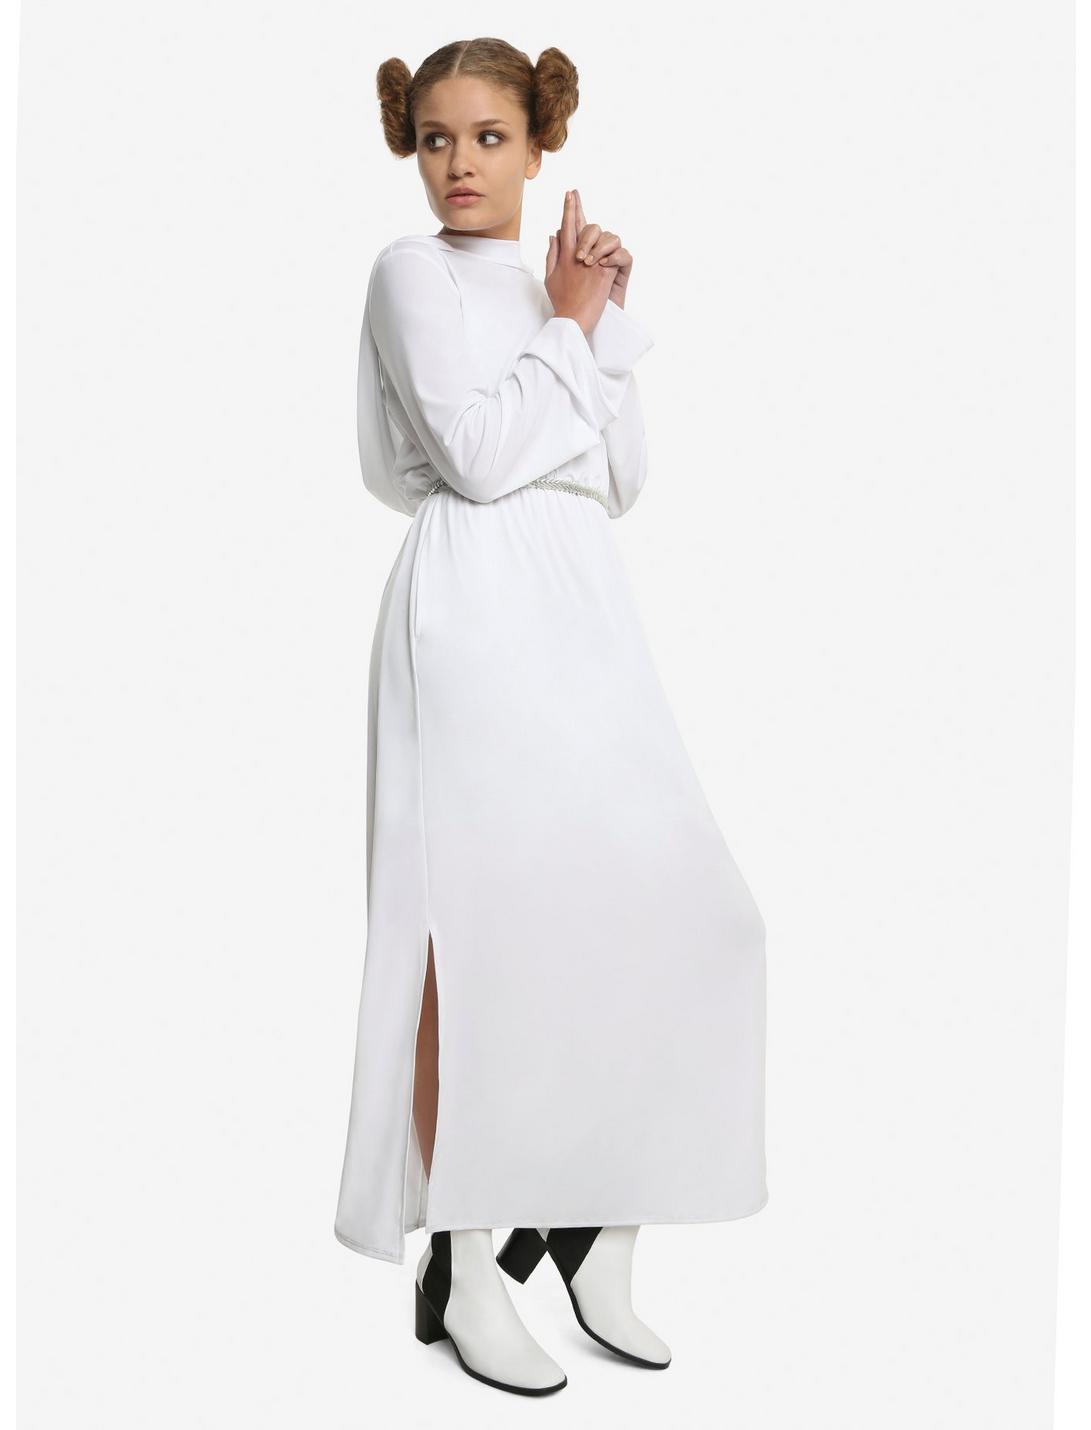 Star Wars Princess Leia Cosplay Dress, WHITE, hi-res